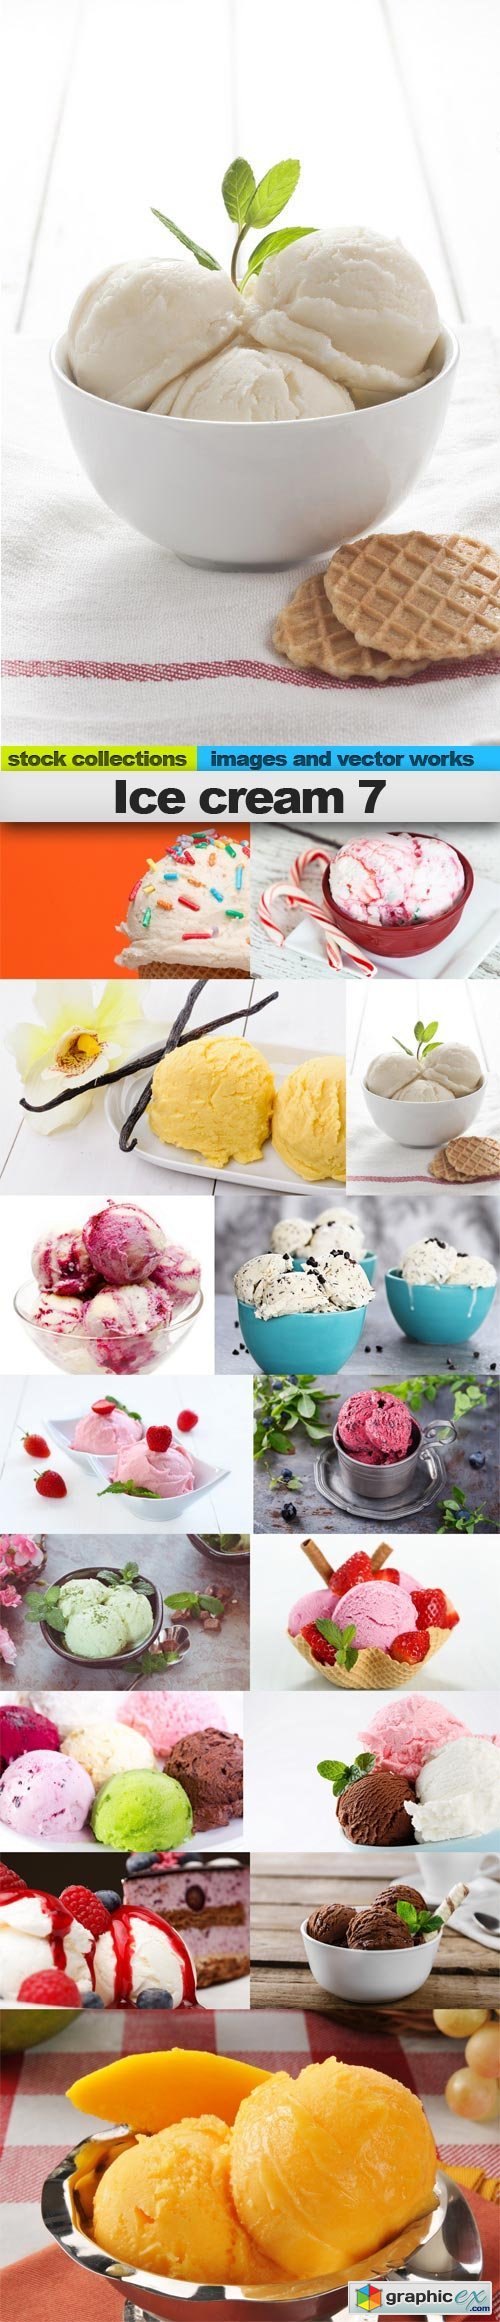 Ice cream 7, 15 x UHQ JPEG